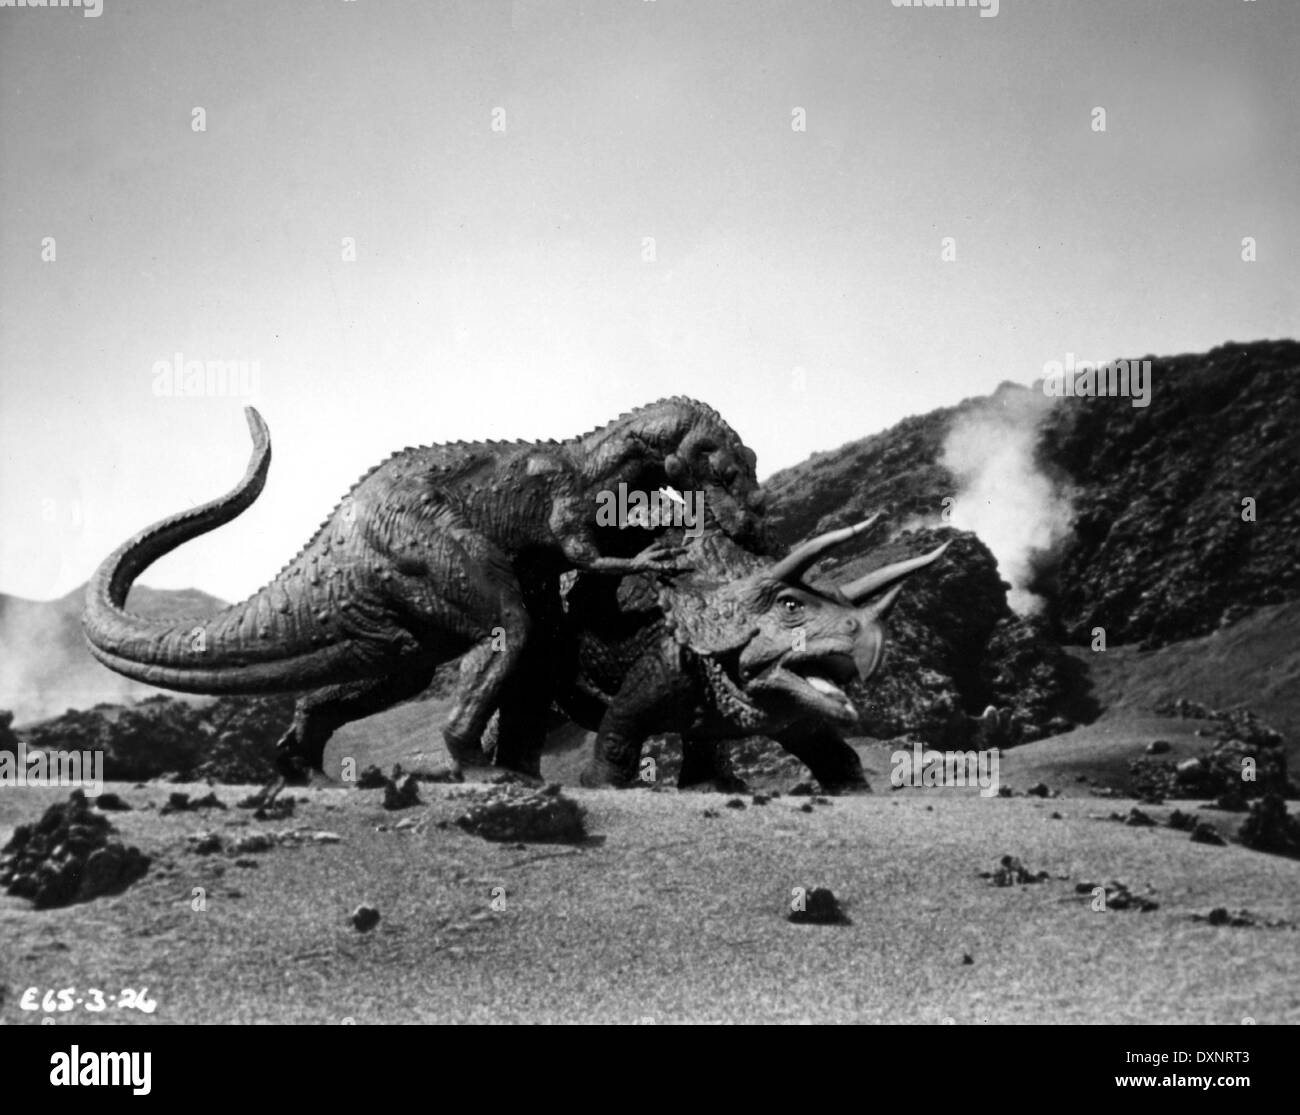 Godzilla, Tyrannosaurus rex and Raquel Welch's bikini: The